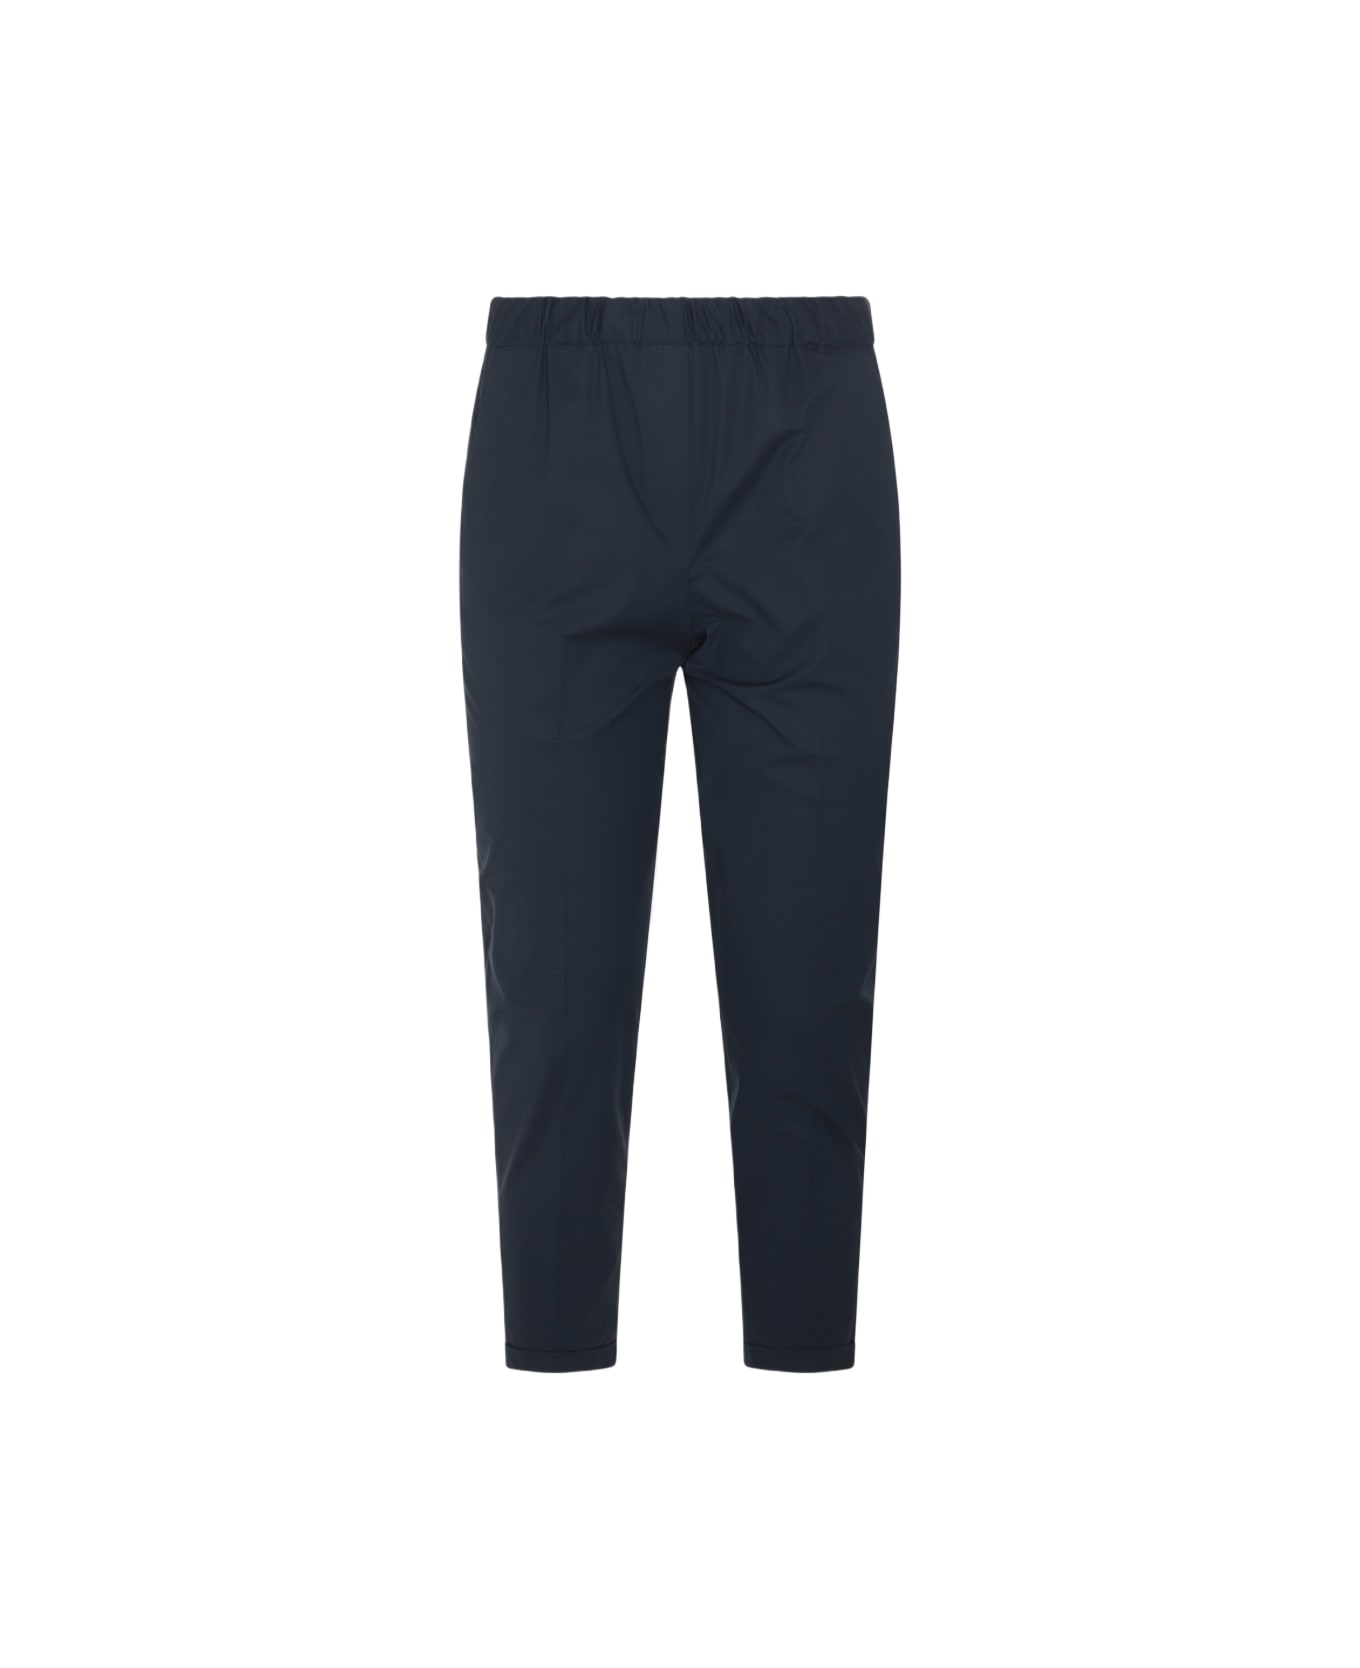 Antonelli Navy Blue Cotton Pants - Blue ボトムス